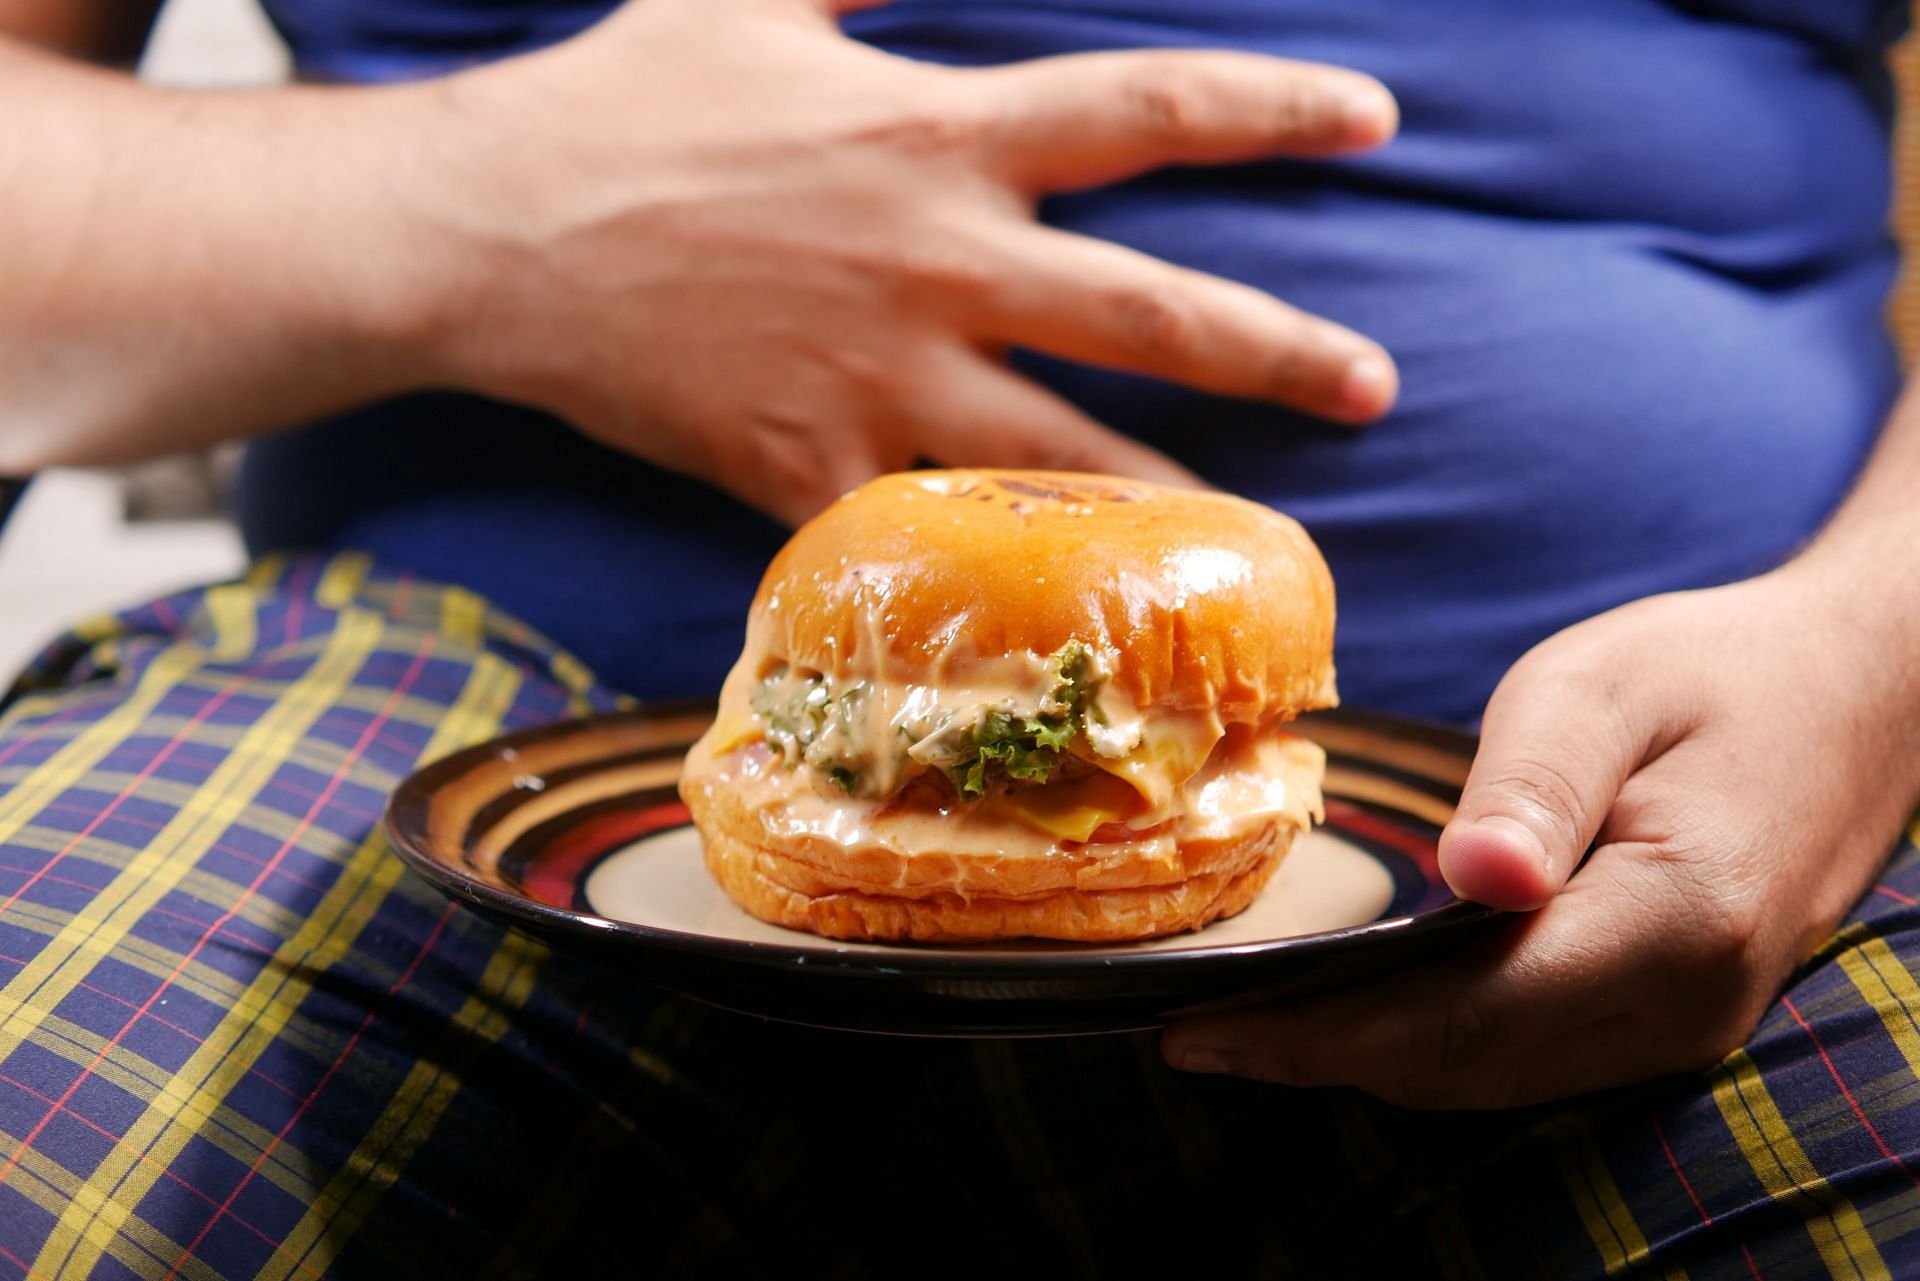 Junk food should be avoided to reduce cholesterol levels (Image via Unsplash/Towfiqu Barbhuiya)